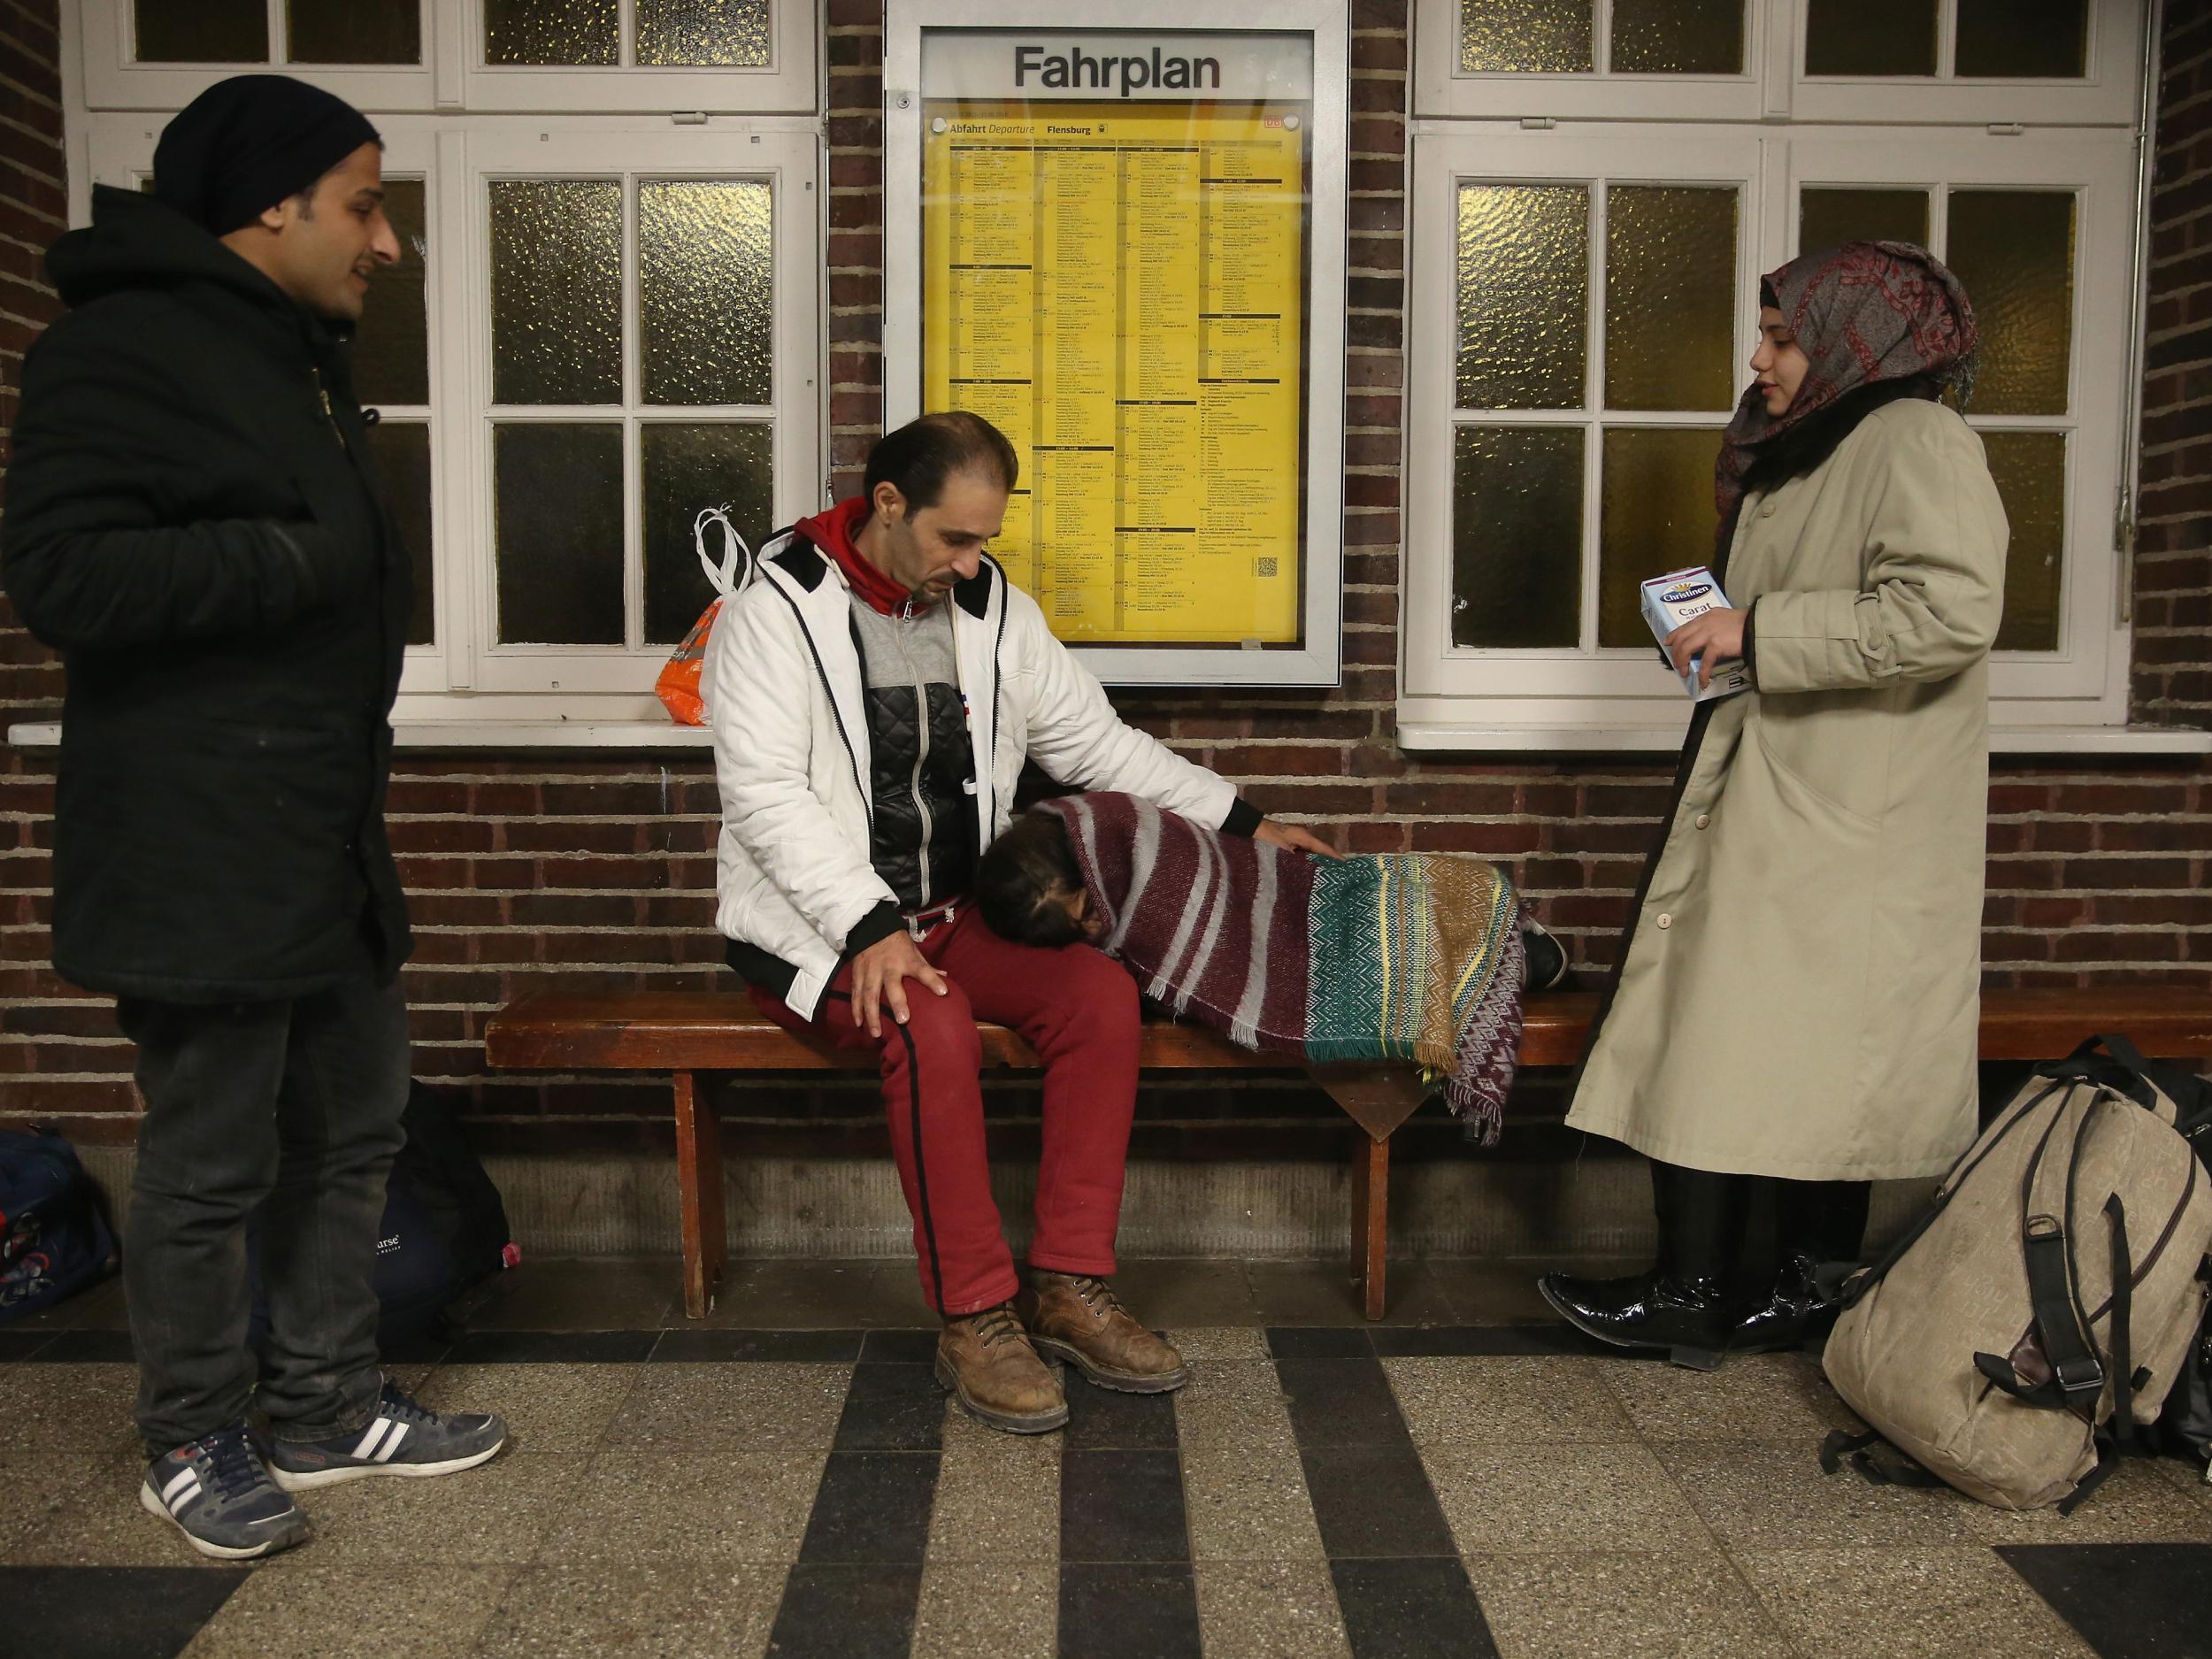 Refugees in Denmark waiting to apply for asylum